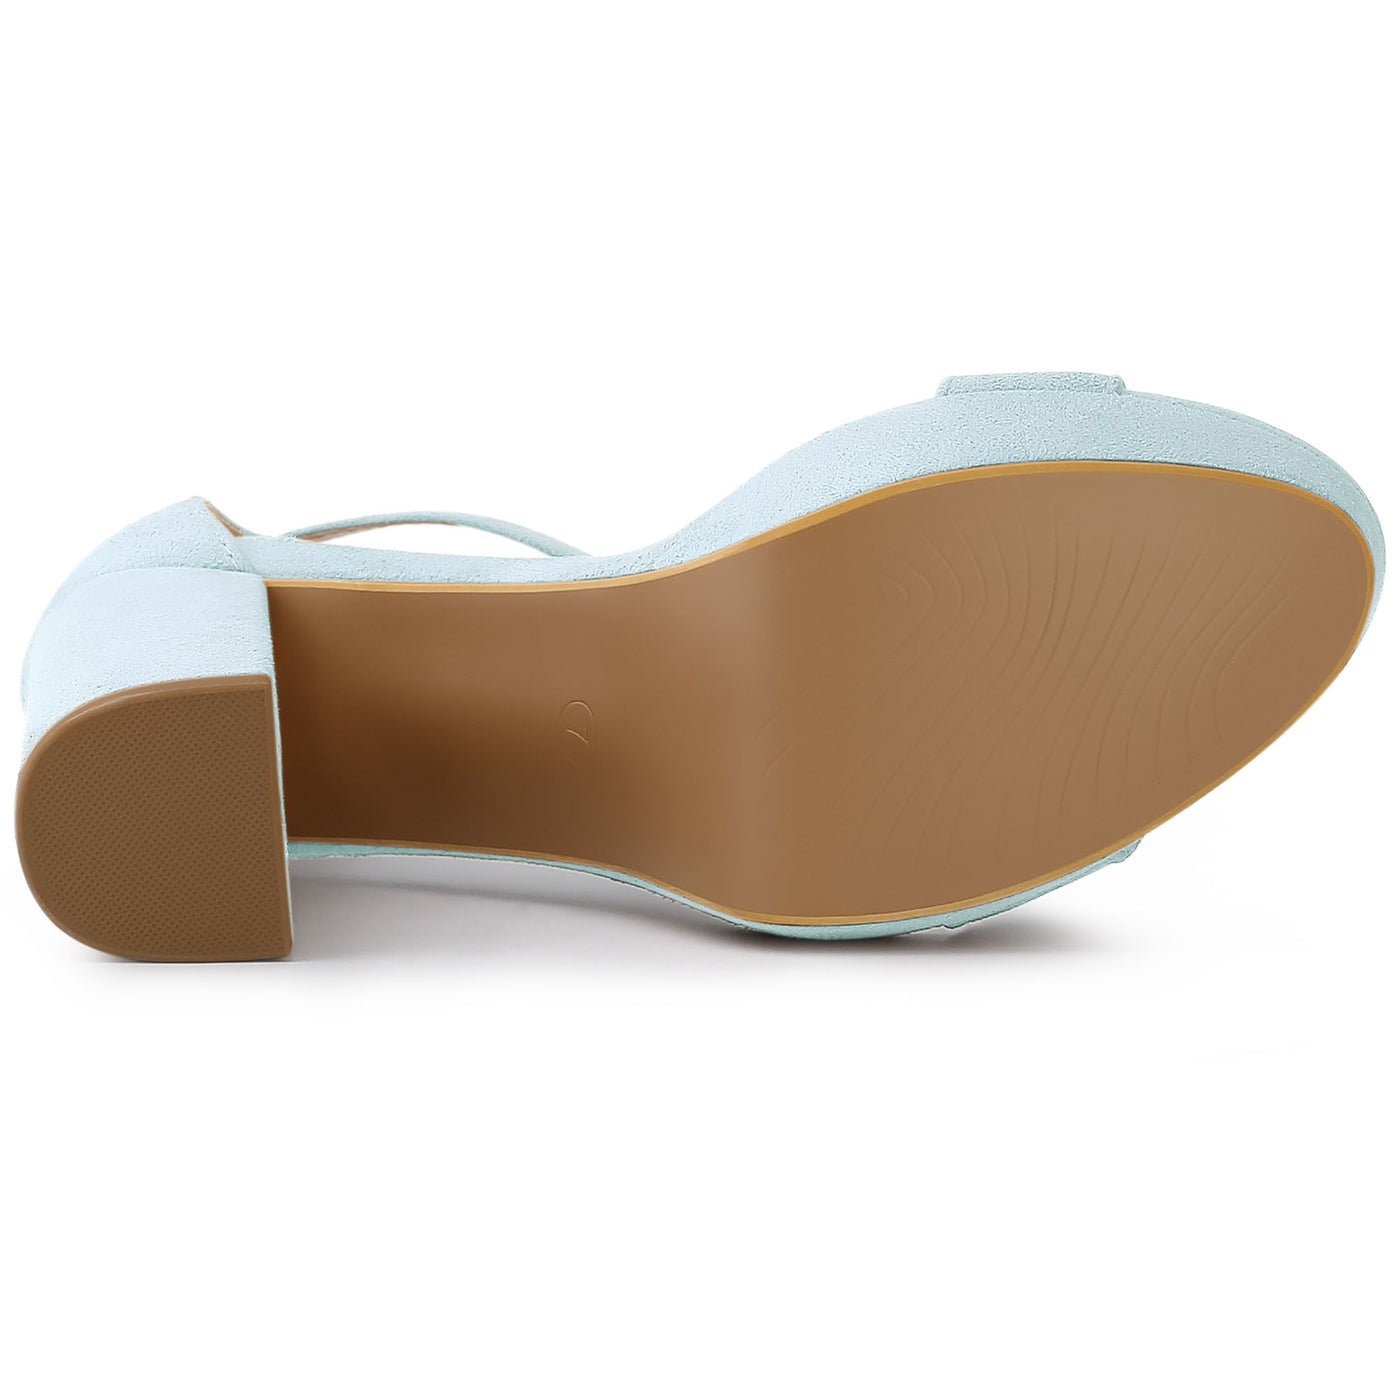 Allegra K Faux Suede Ankle Strap Platform Chunky Heel Sandals